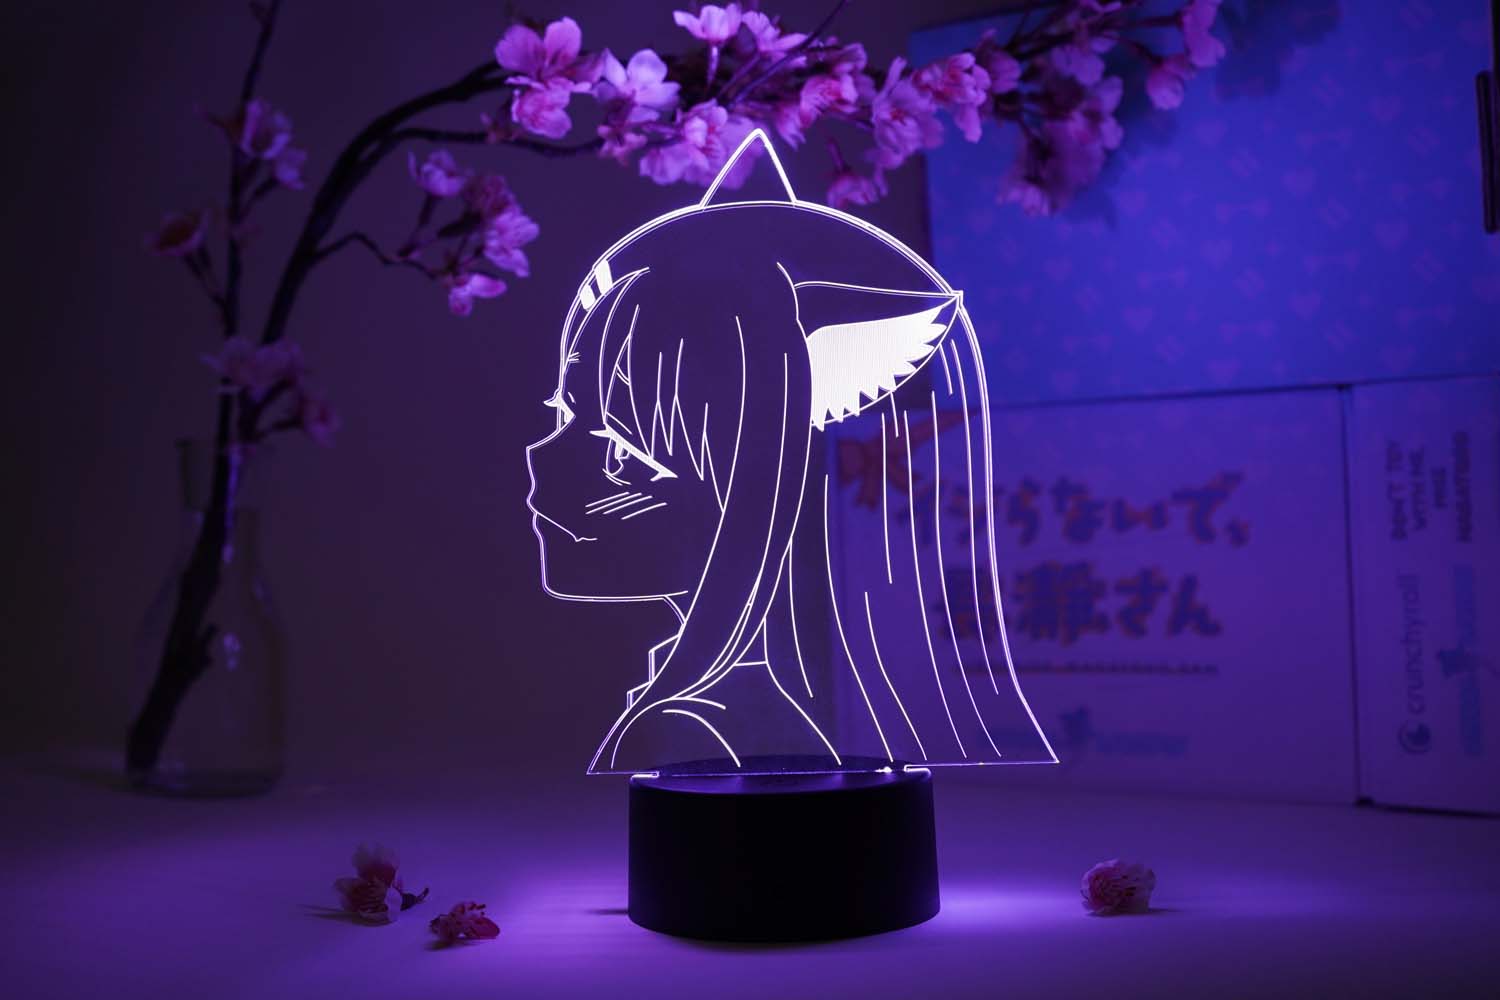 Buy SDGSDGD Anime Demon SlAyer Muichiro Tokito lamp Cool 3D Illusion Night  Lamp Home Room Decor Upward Lighting Acrylic LED Light Xmas Gift Otaku Glow  Desktop Lamps16 Colors with Remote Online at